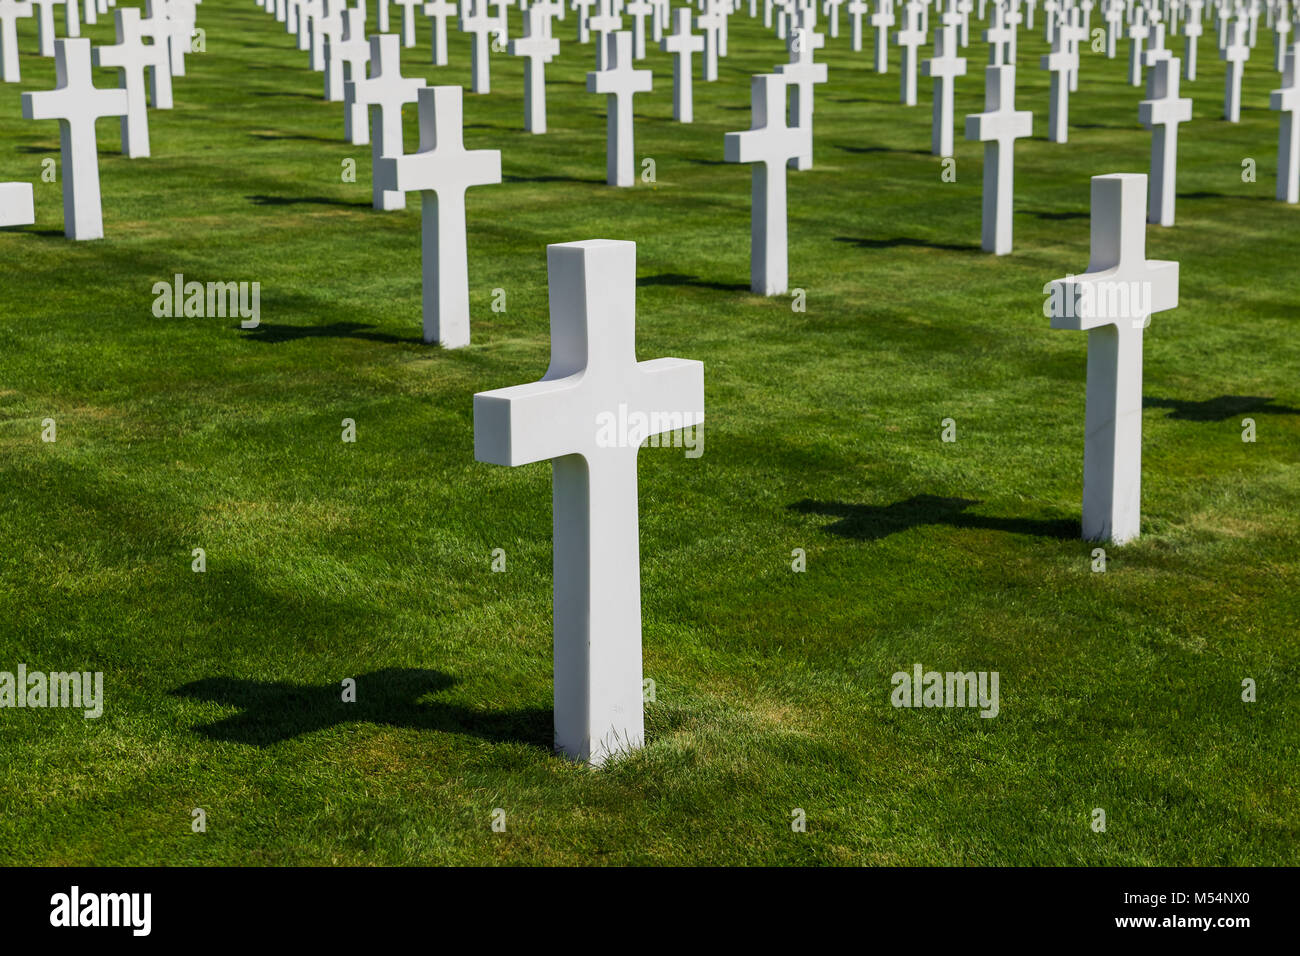 American memorial cemetery of World War II in Luxembourg Stock Photo